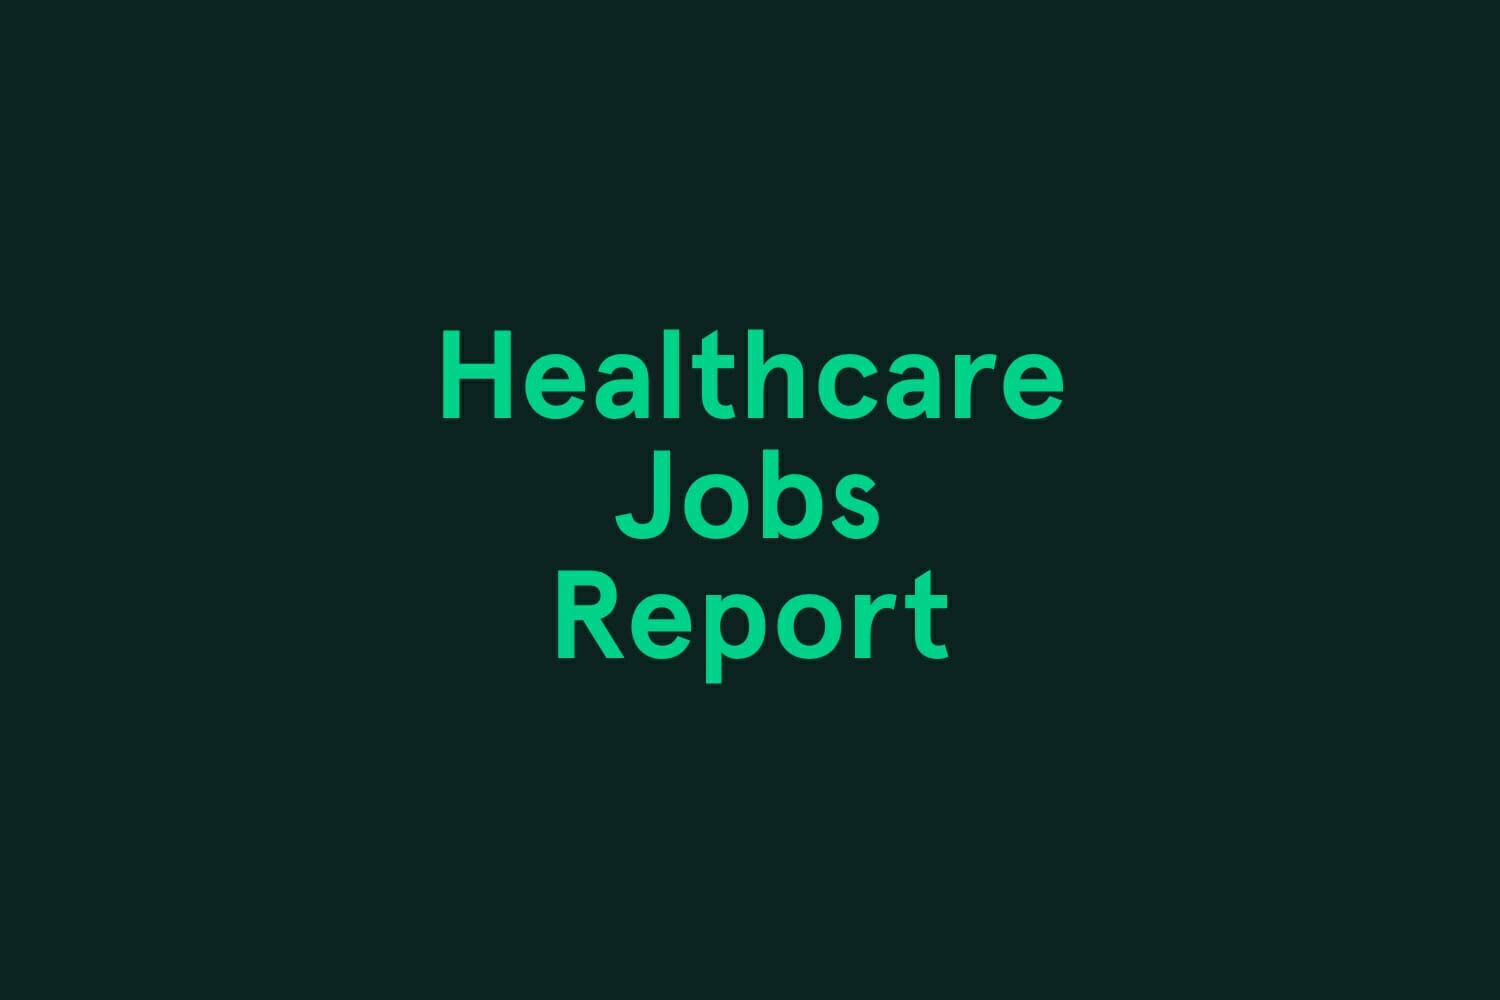 September Healthcare Jobs Report Infographic